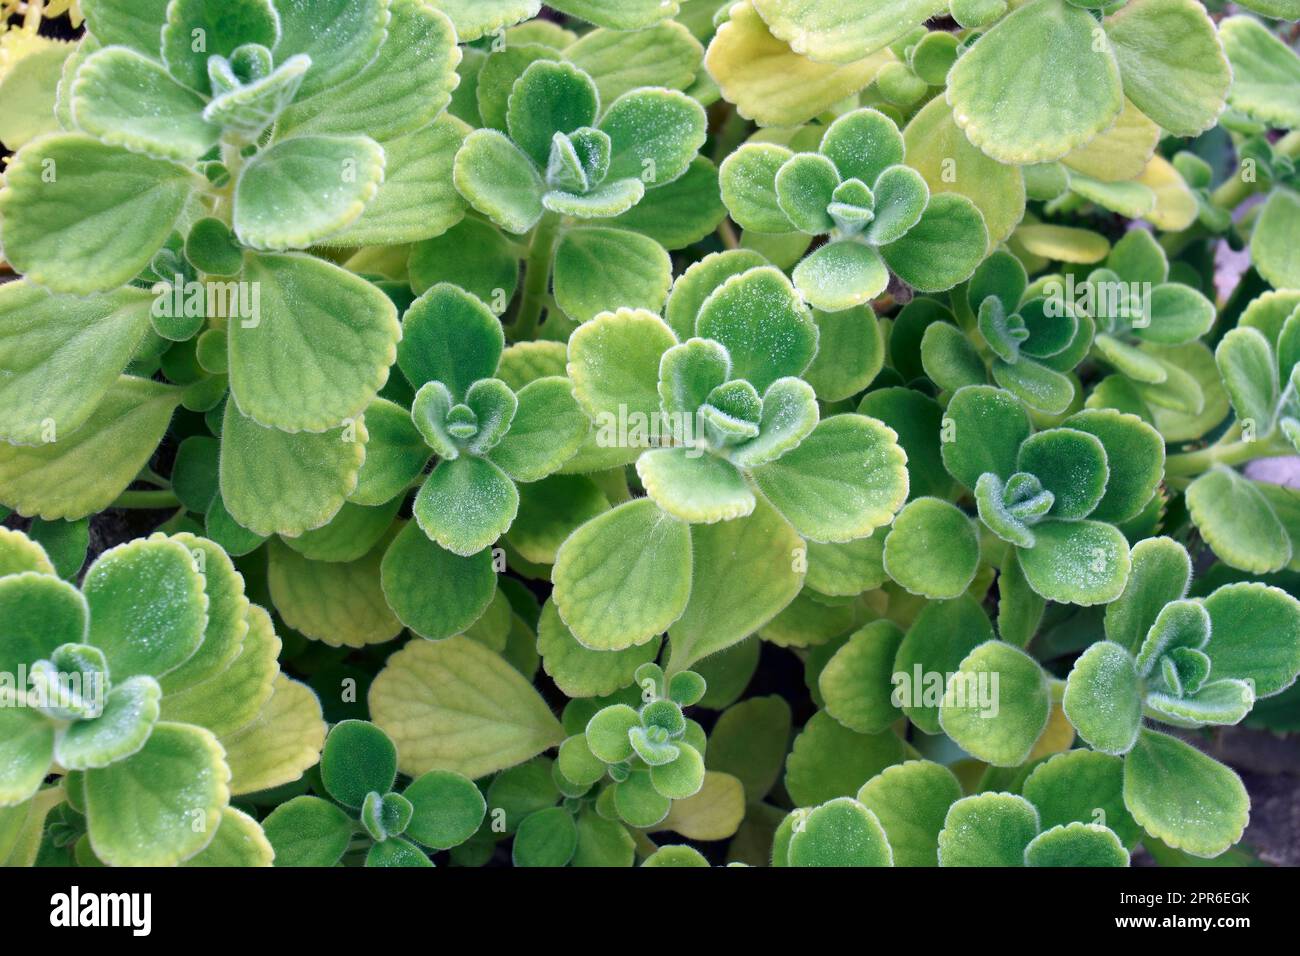 Close-up image of Vicks plants Stock Photo